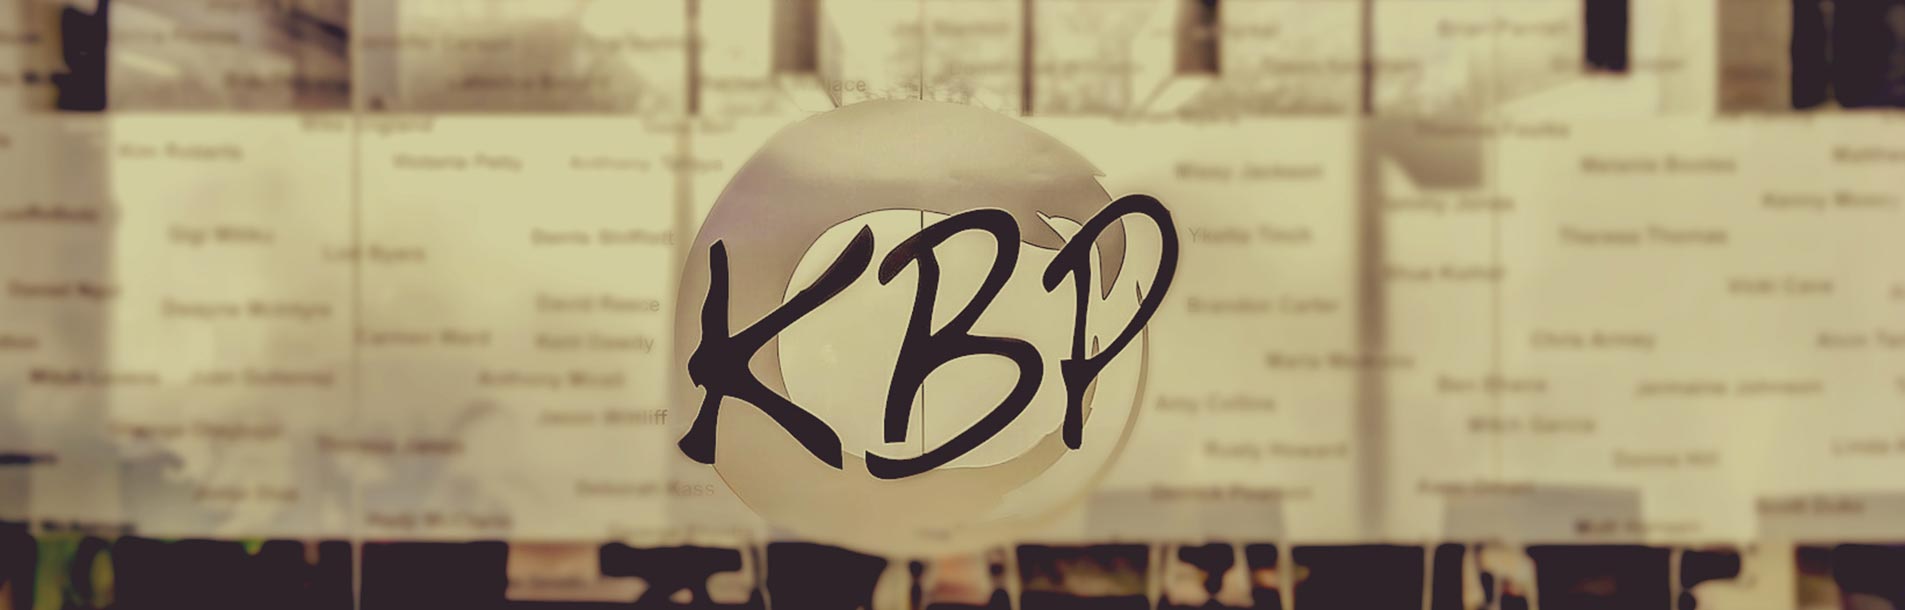 Kbp Bells Traditions